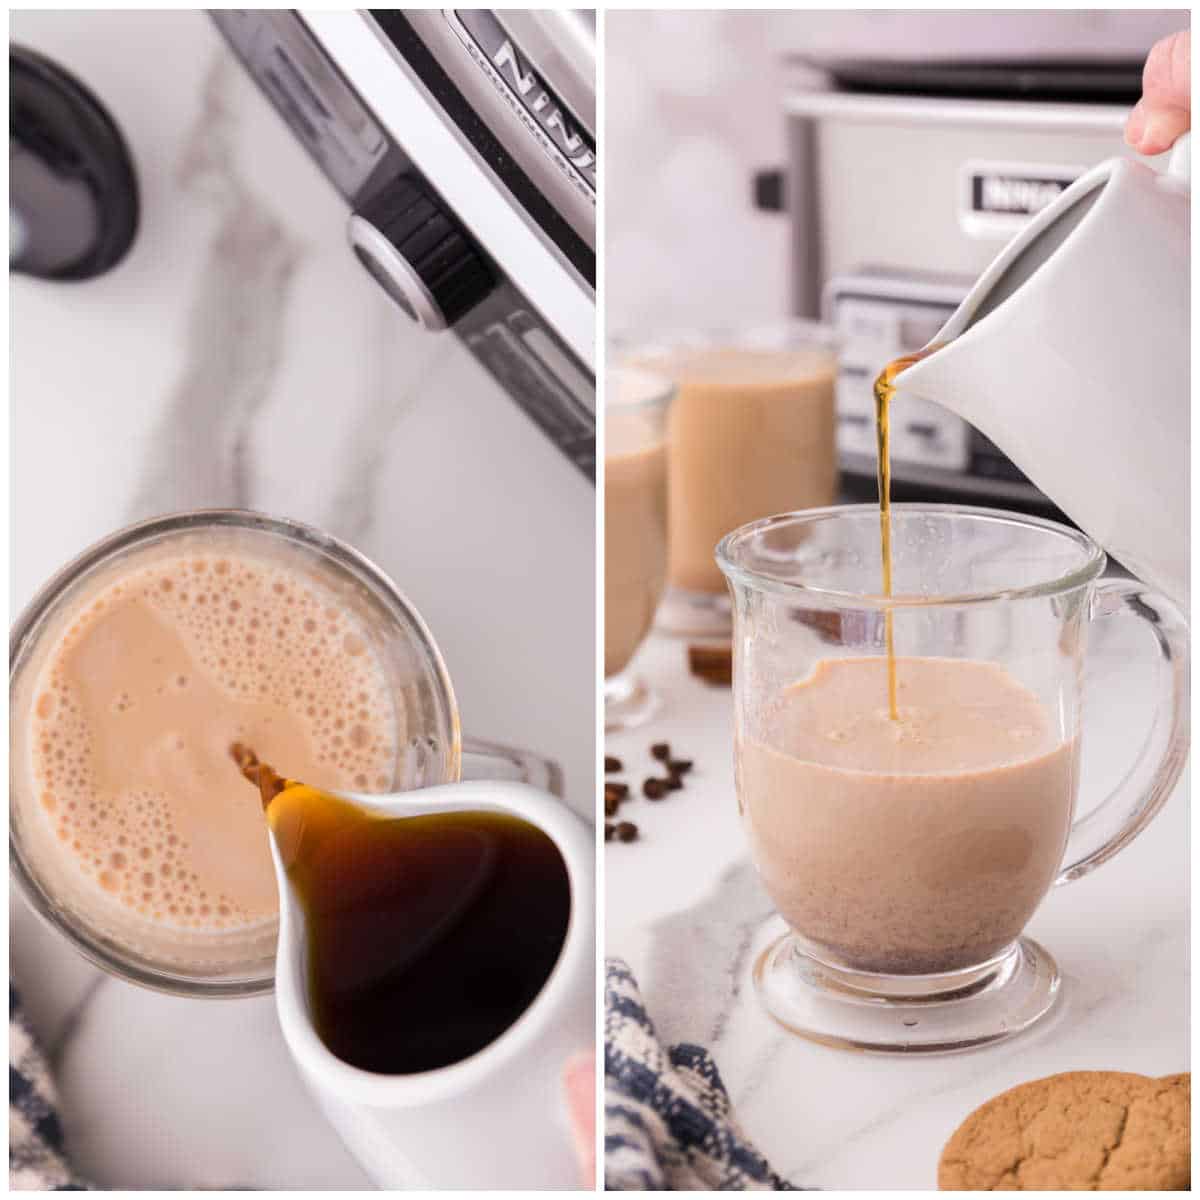 Steps to make gingerbread lattes.